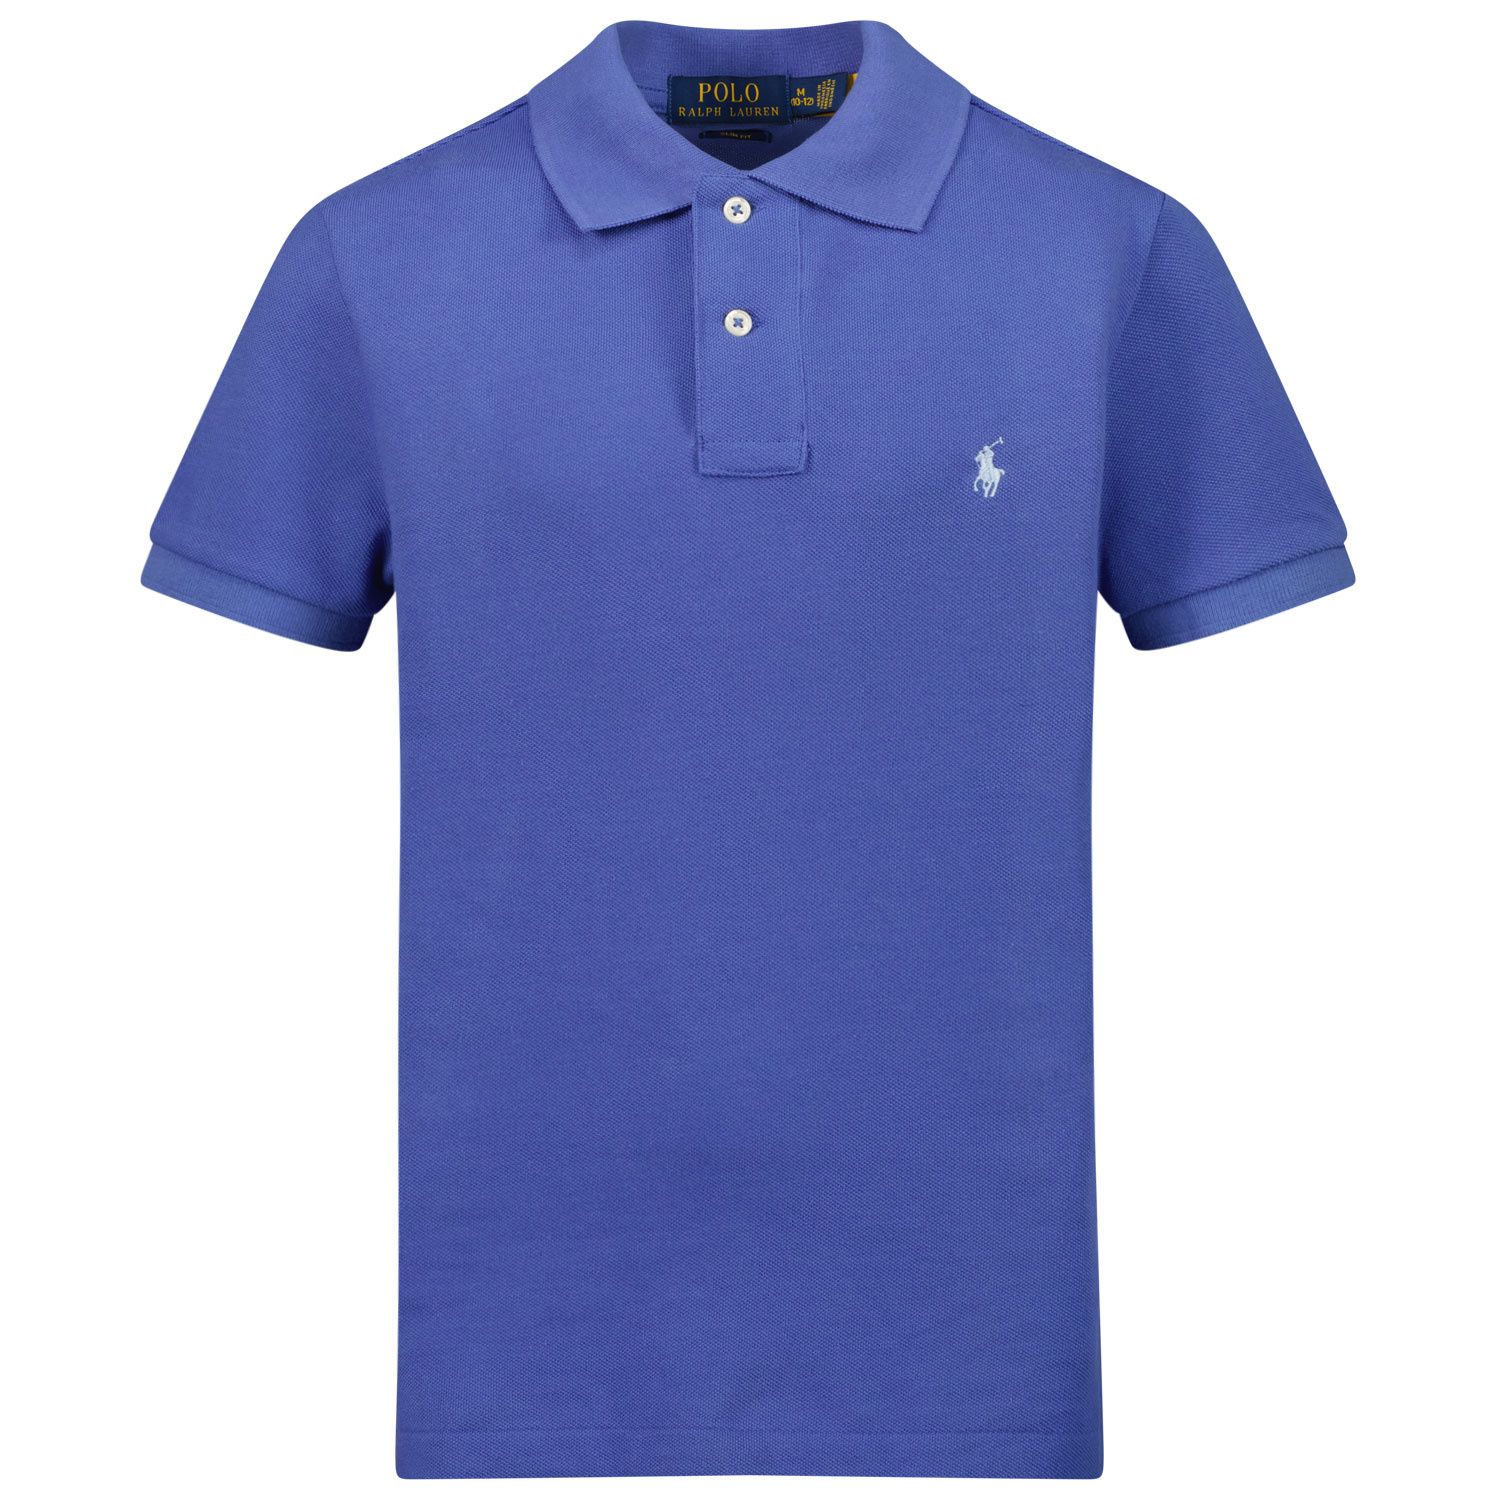 Picture of Ralph Lauren 708857 kids polo shirt blue